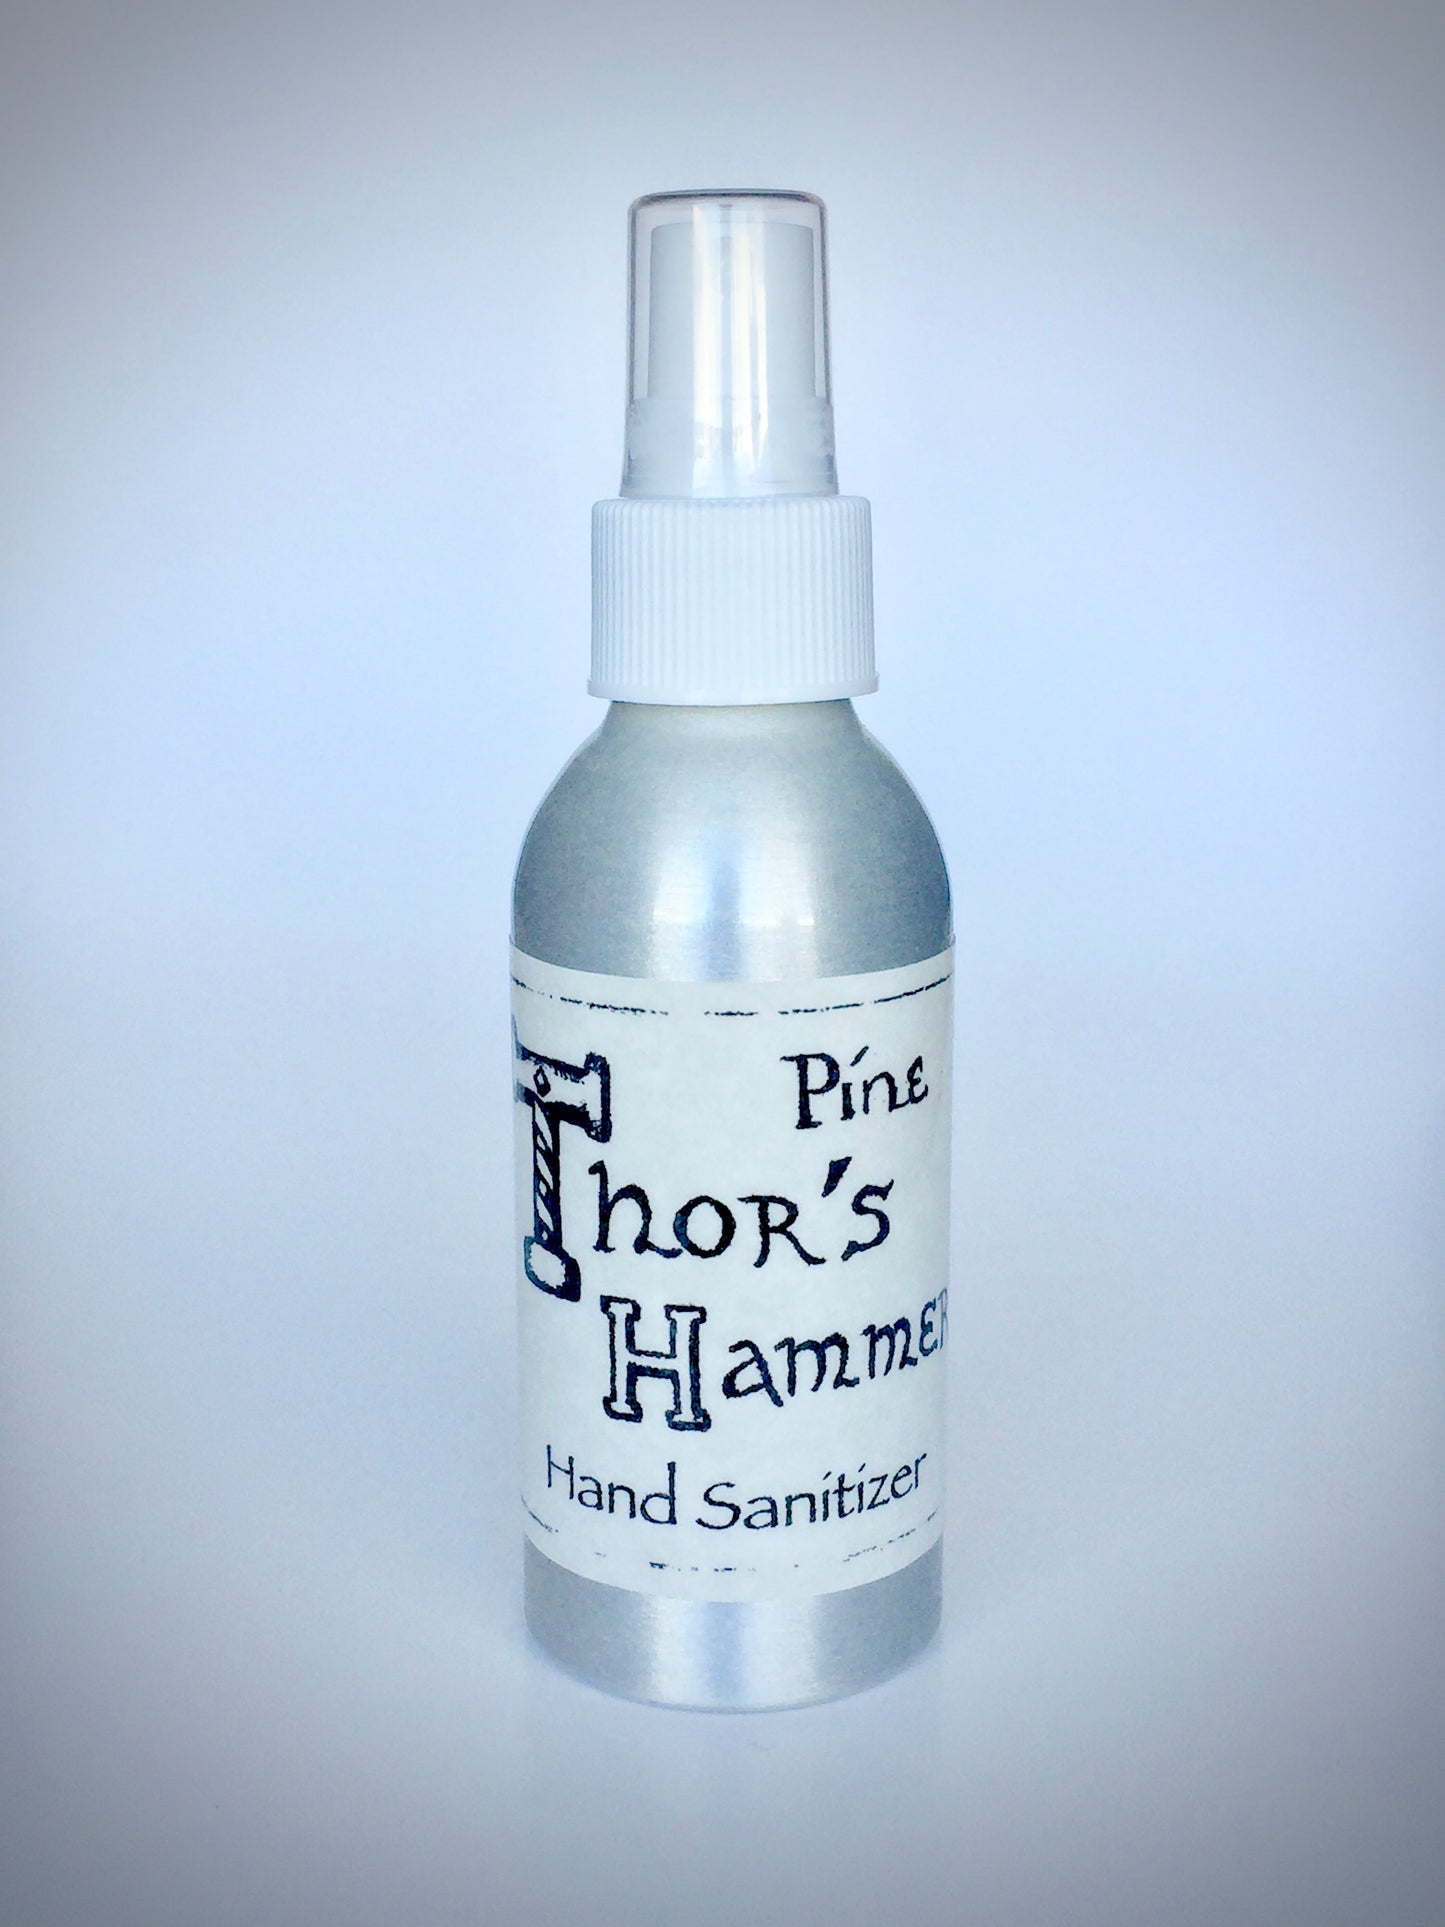 Thor's hammer pine hand sanitizer